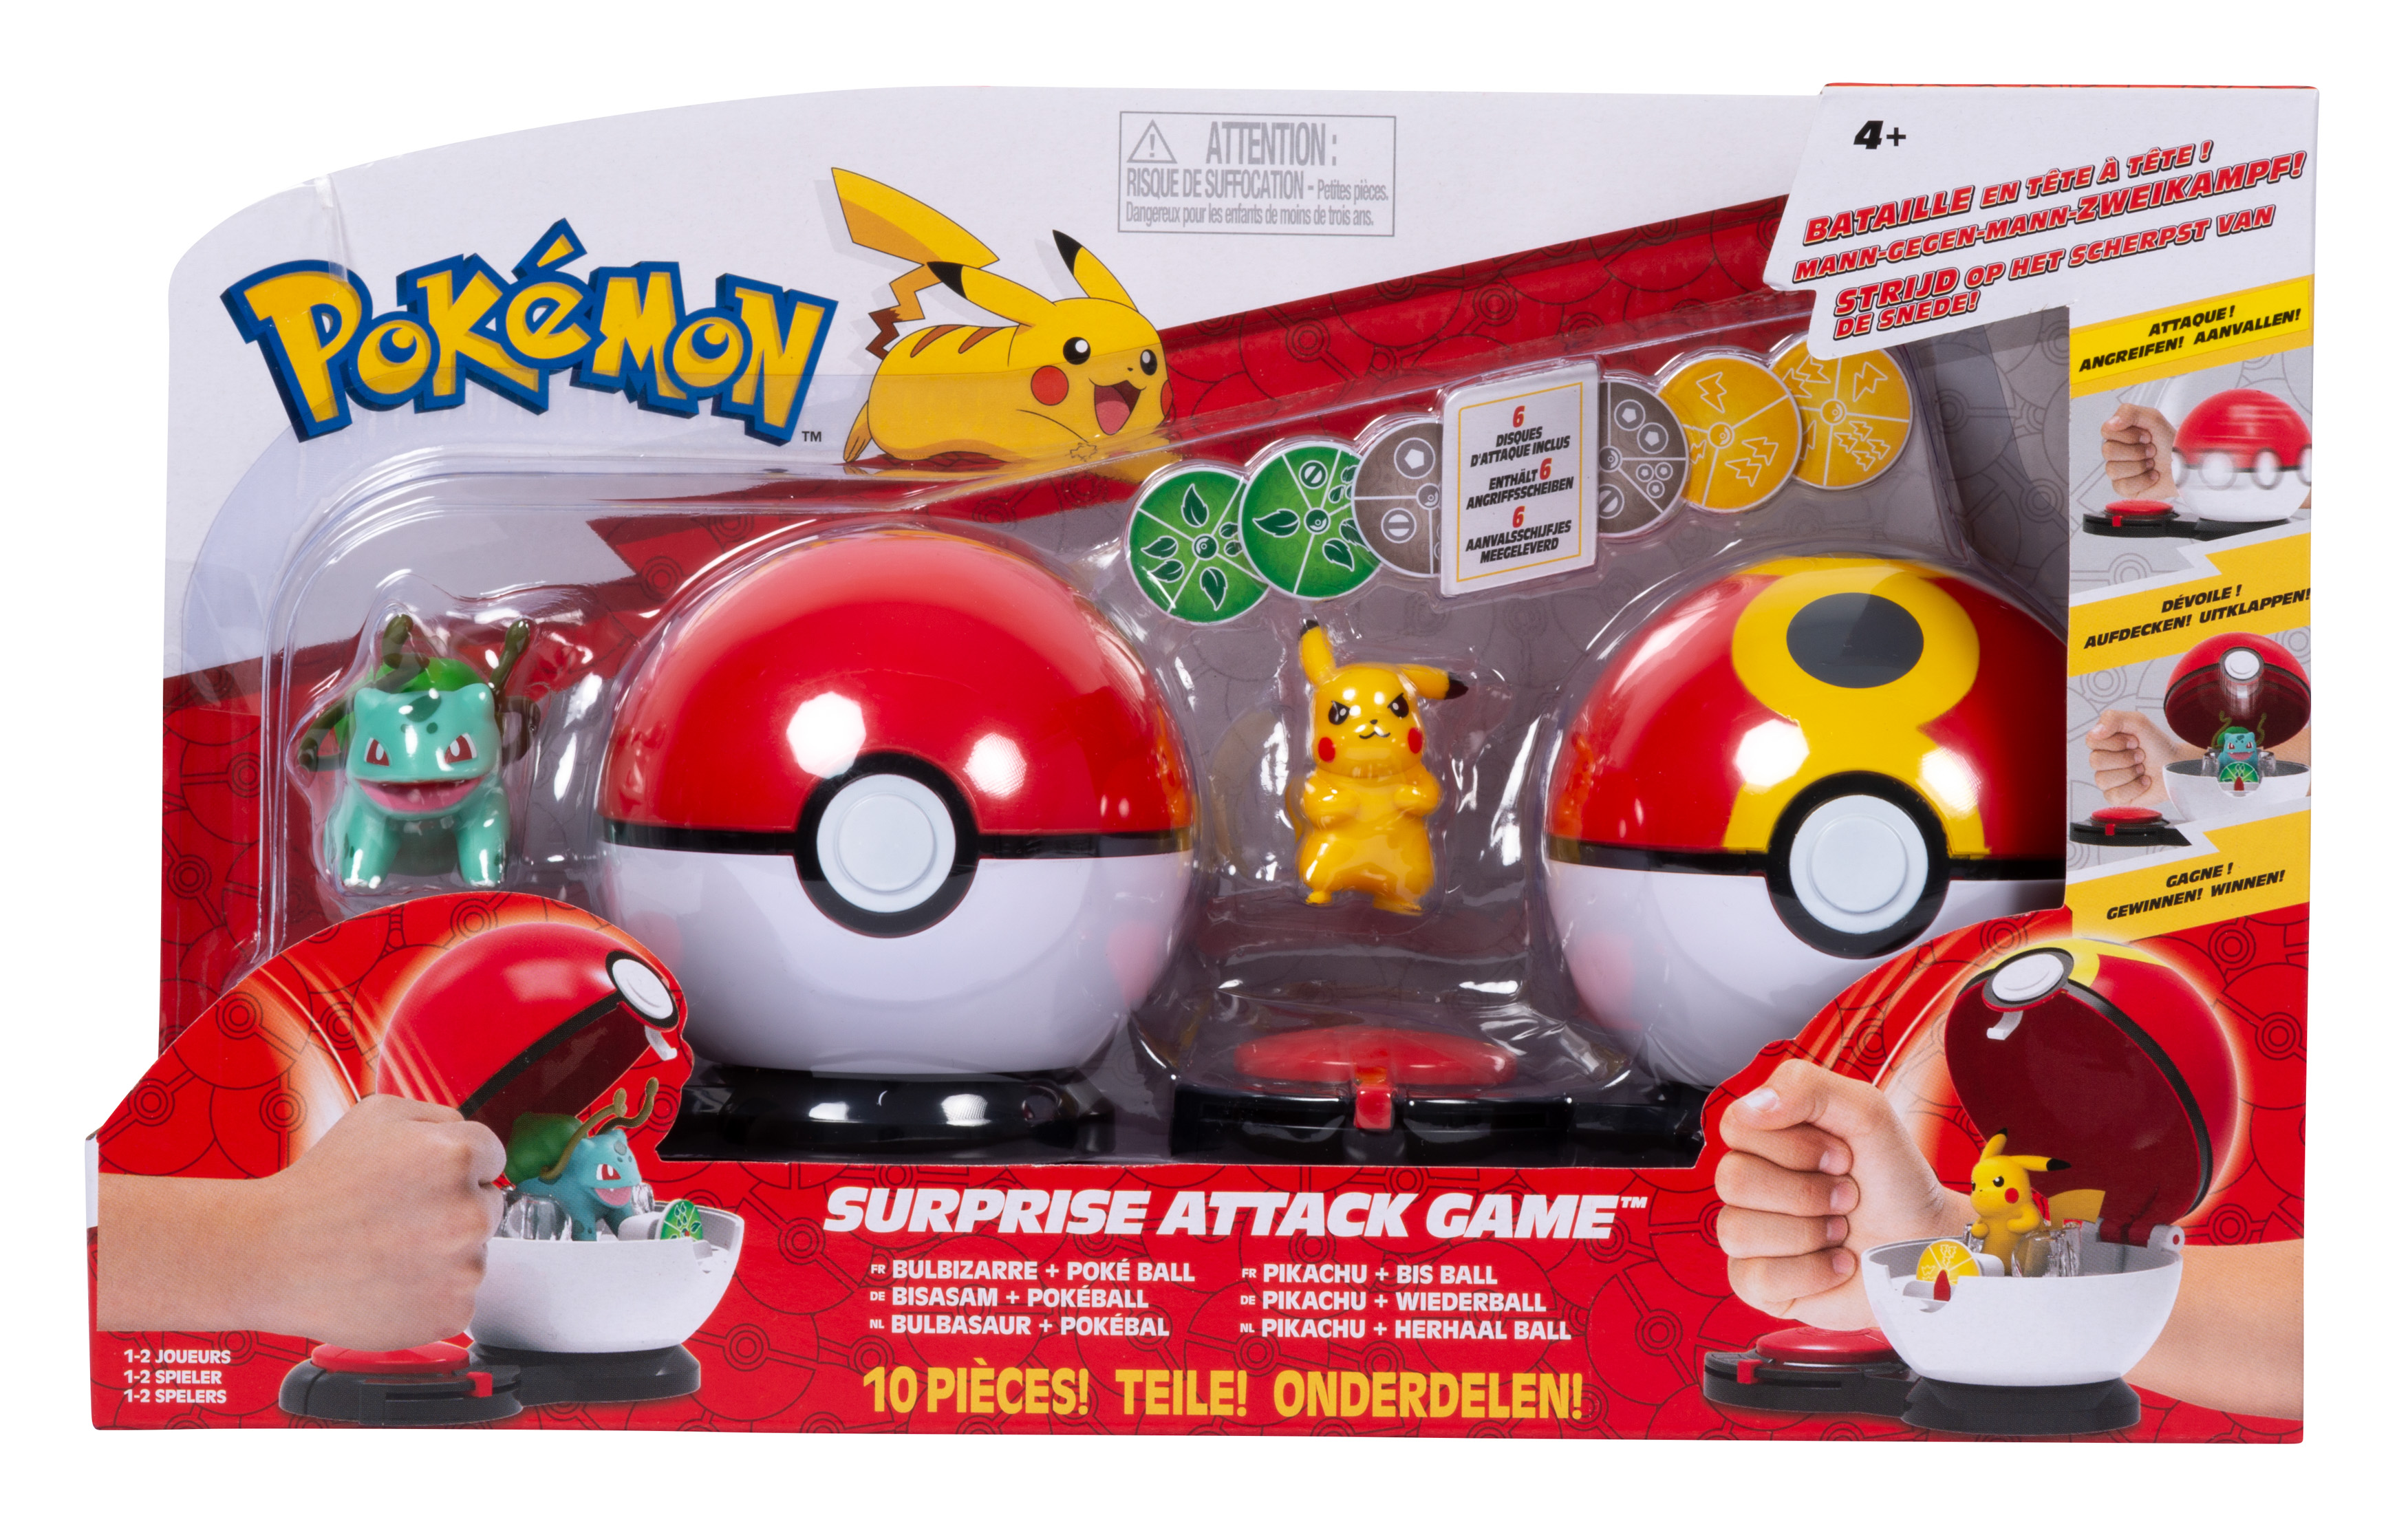 Pokémon Surprise Attack Game - Battle A (Pikachu + Bisasam)